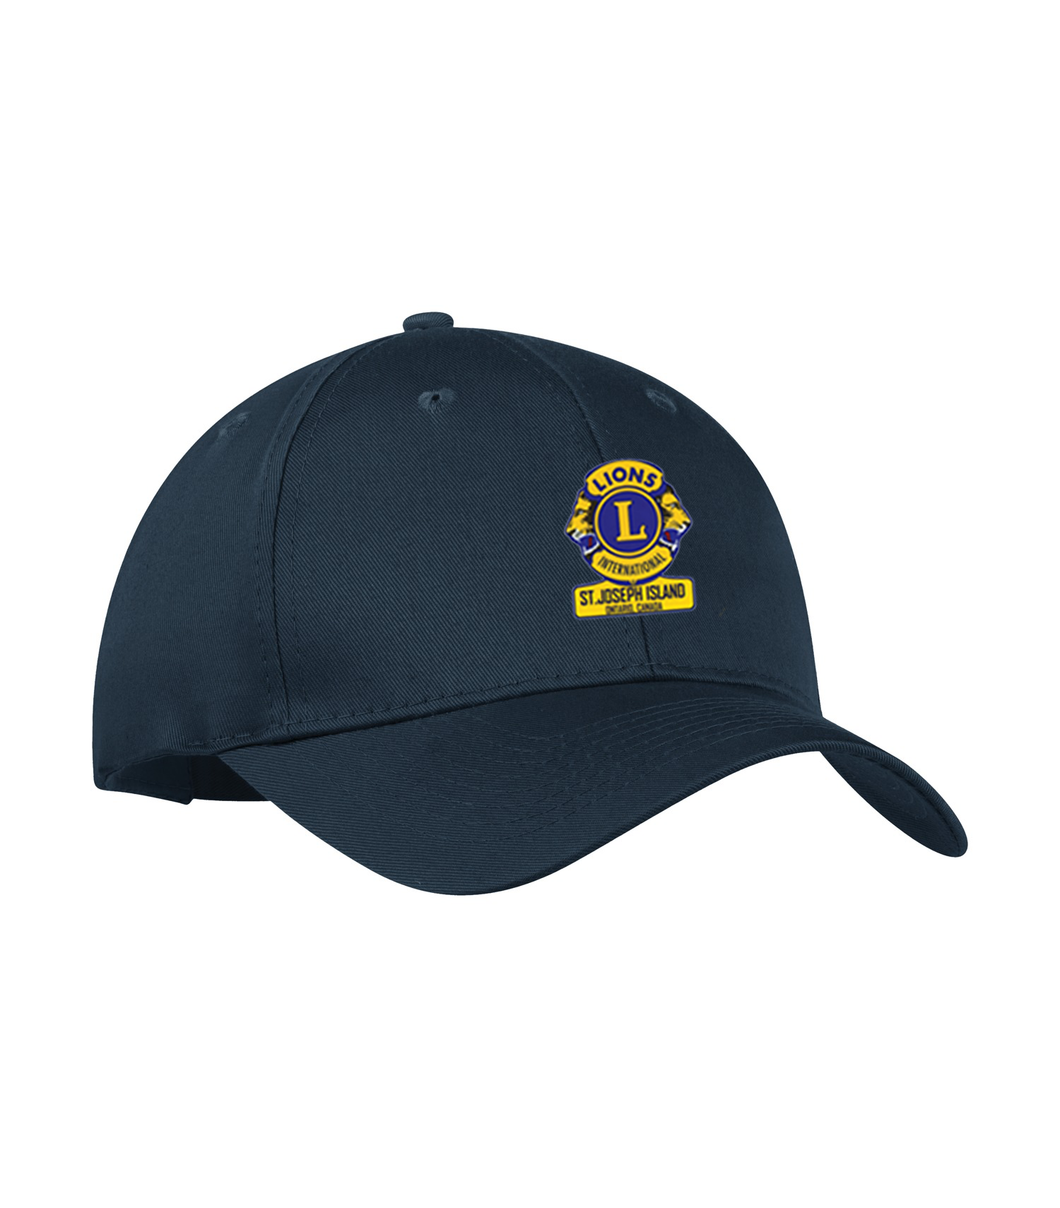 St. Joseph Island Lions Club Adjustable Hat